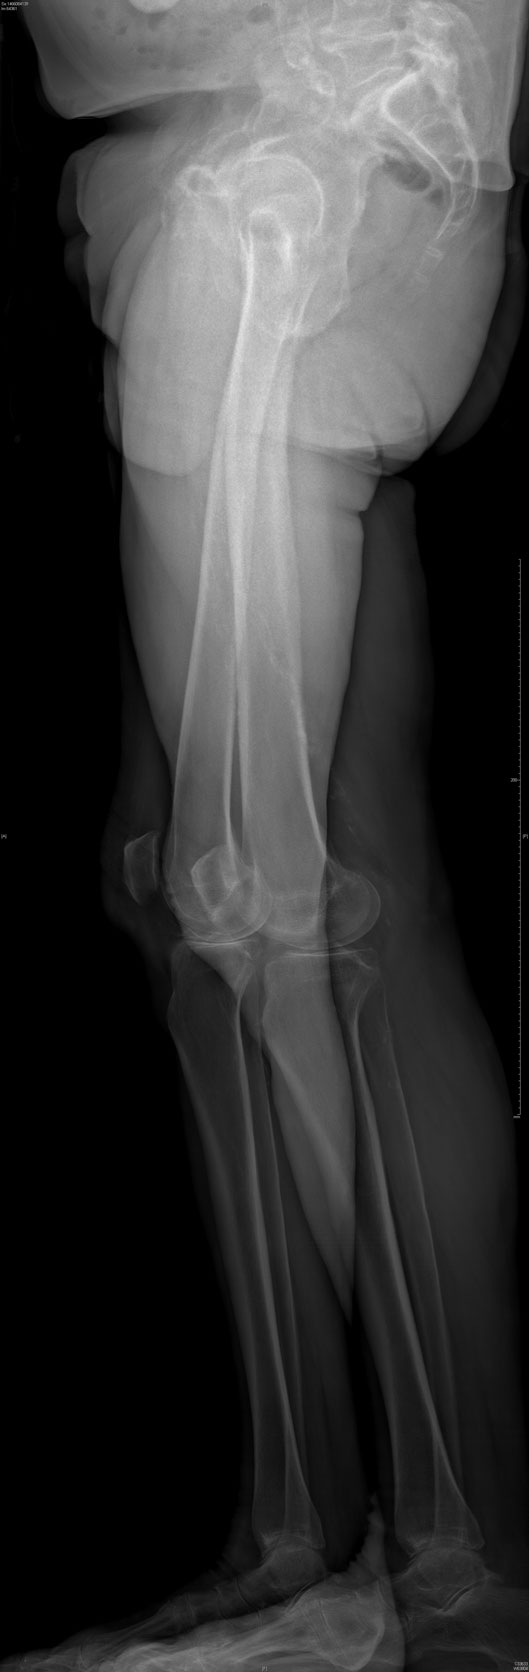 Ostéotomie tibiale de valgisation ortho7